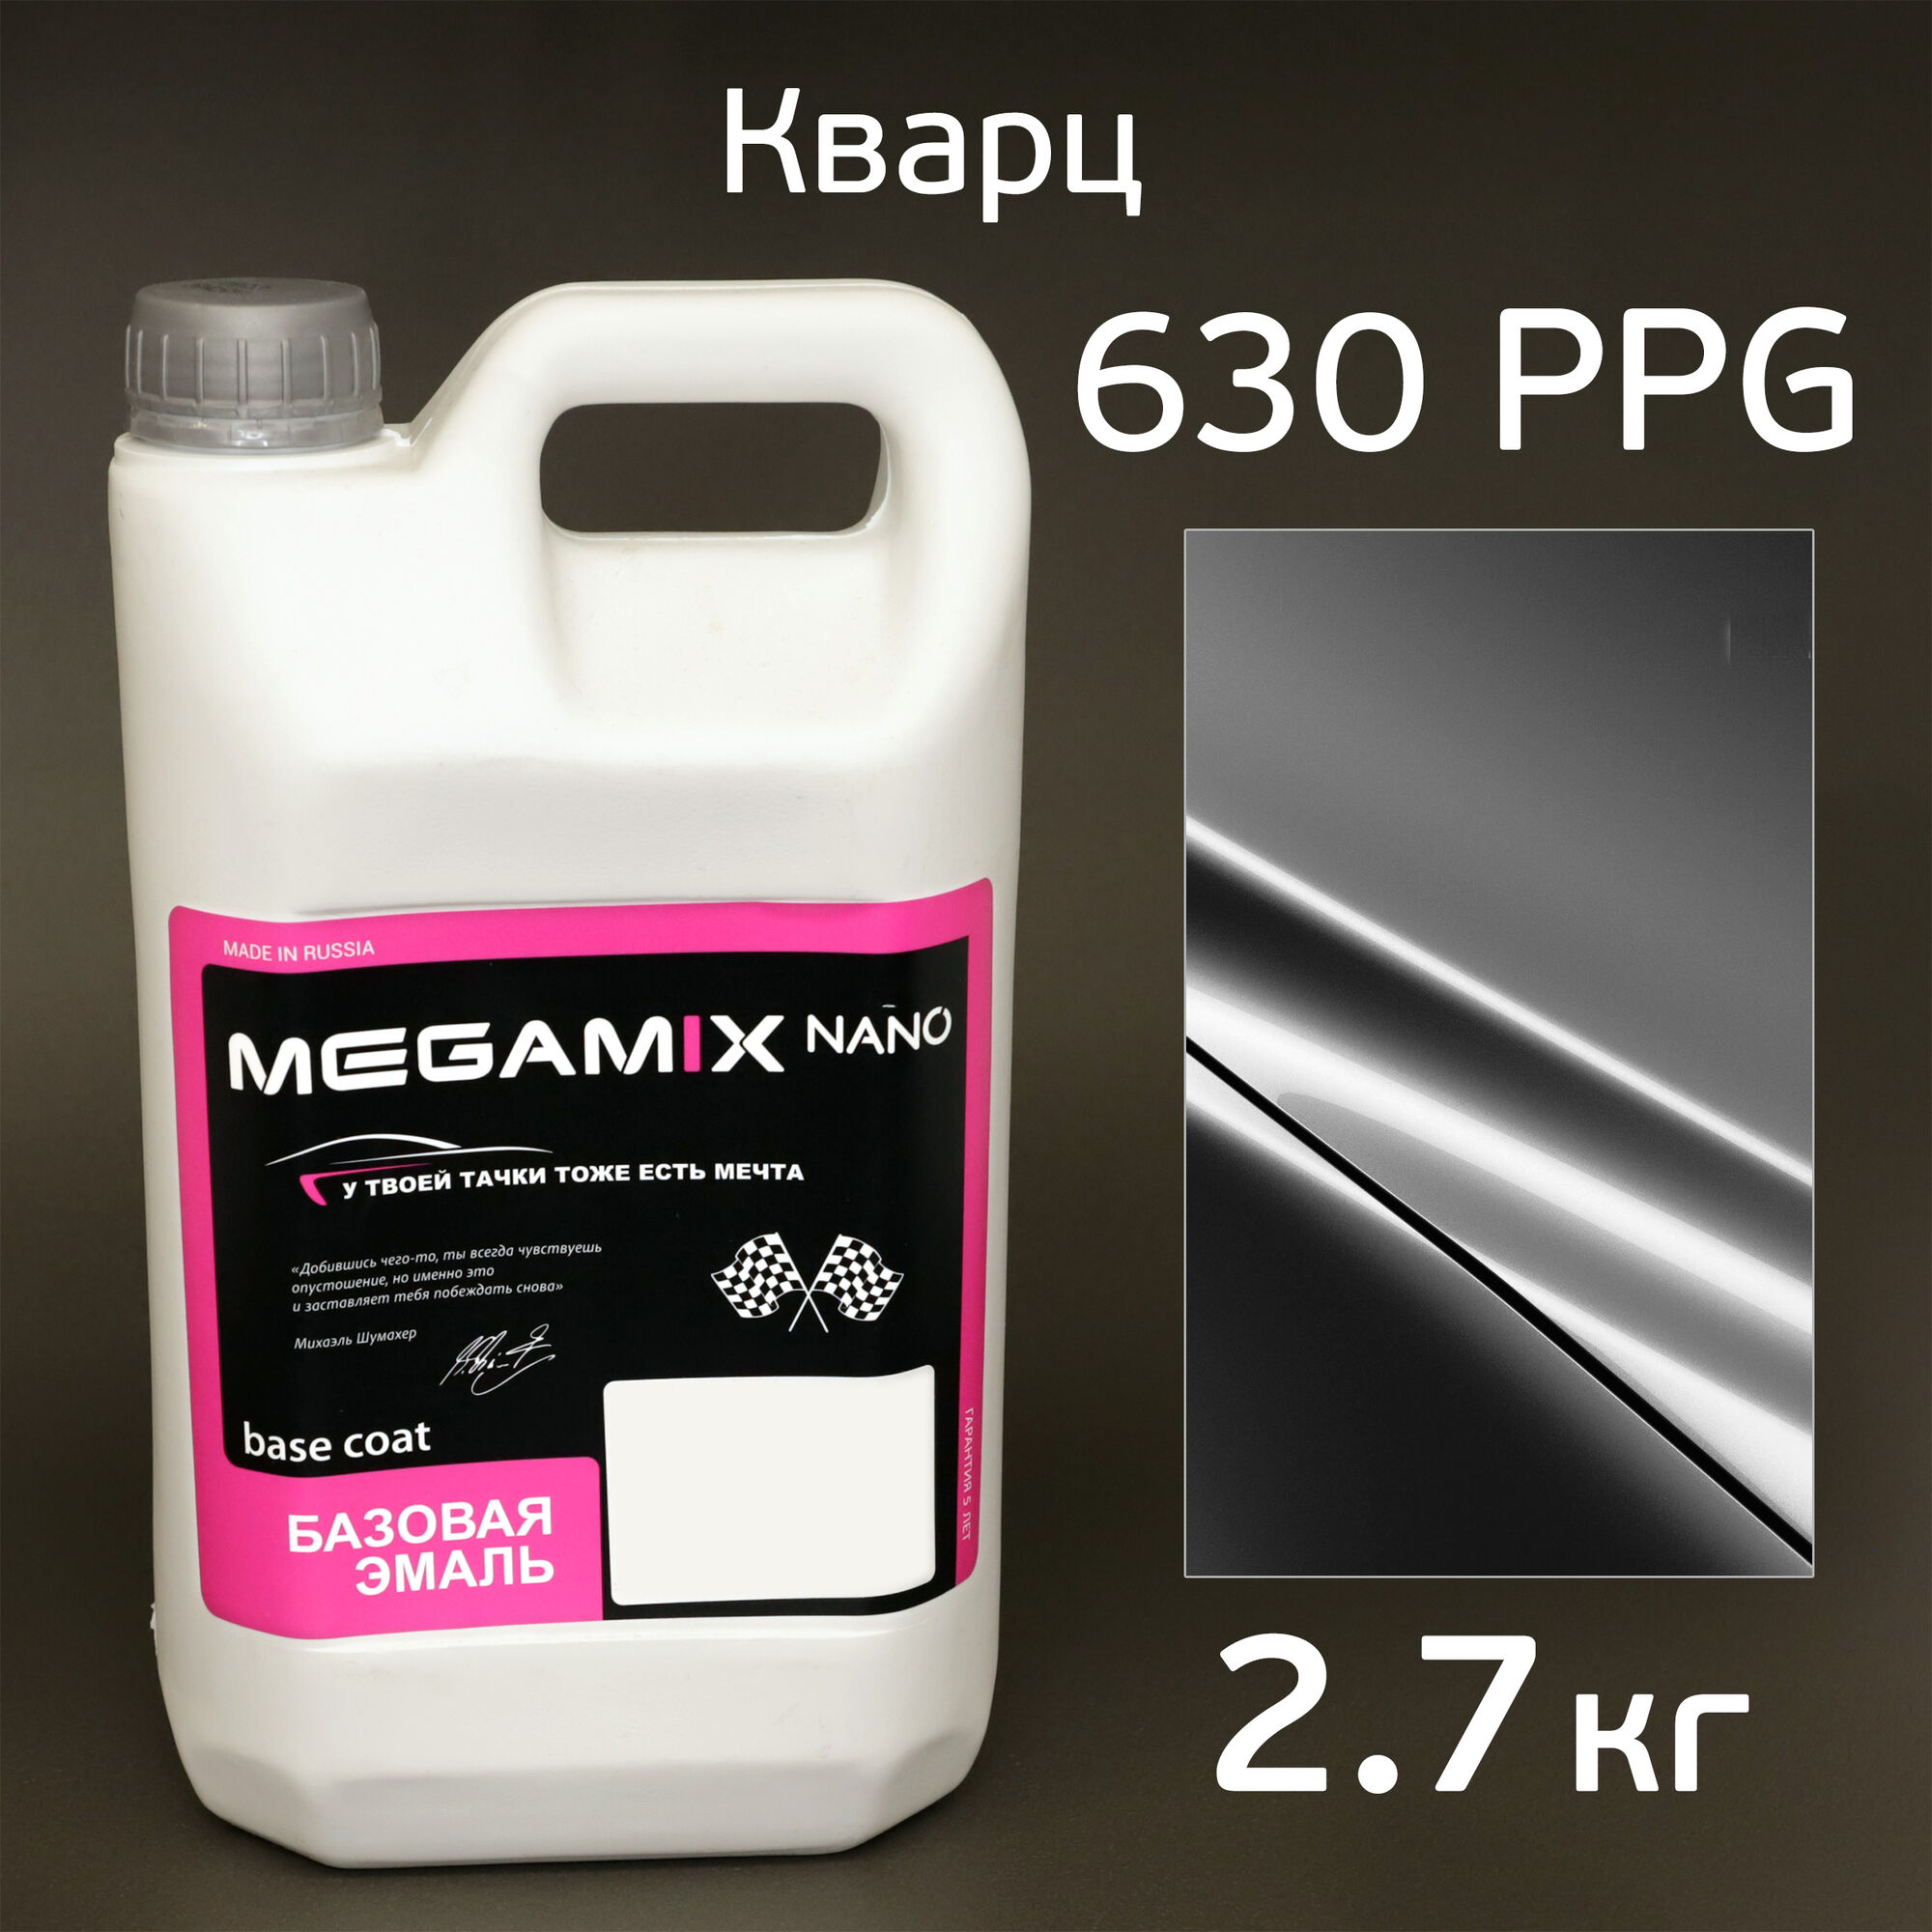 Автоэмаль MegaMIX (2.7кг) Lada 630 PPG Кварц, металлик